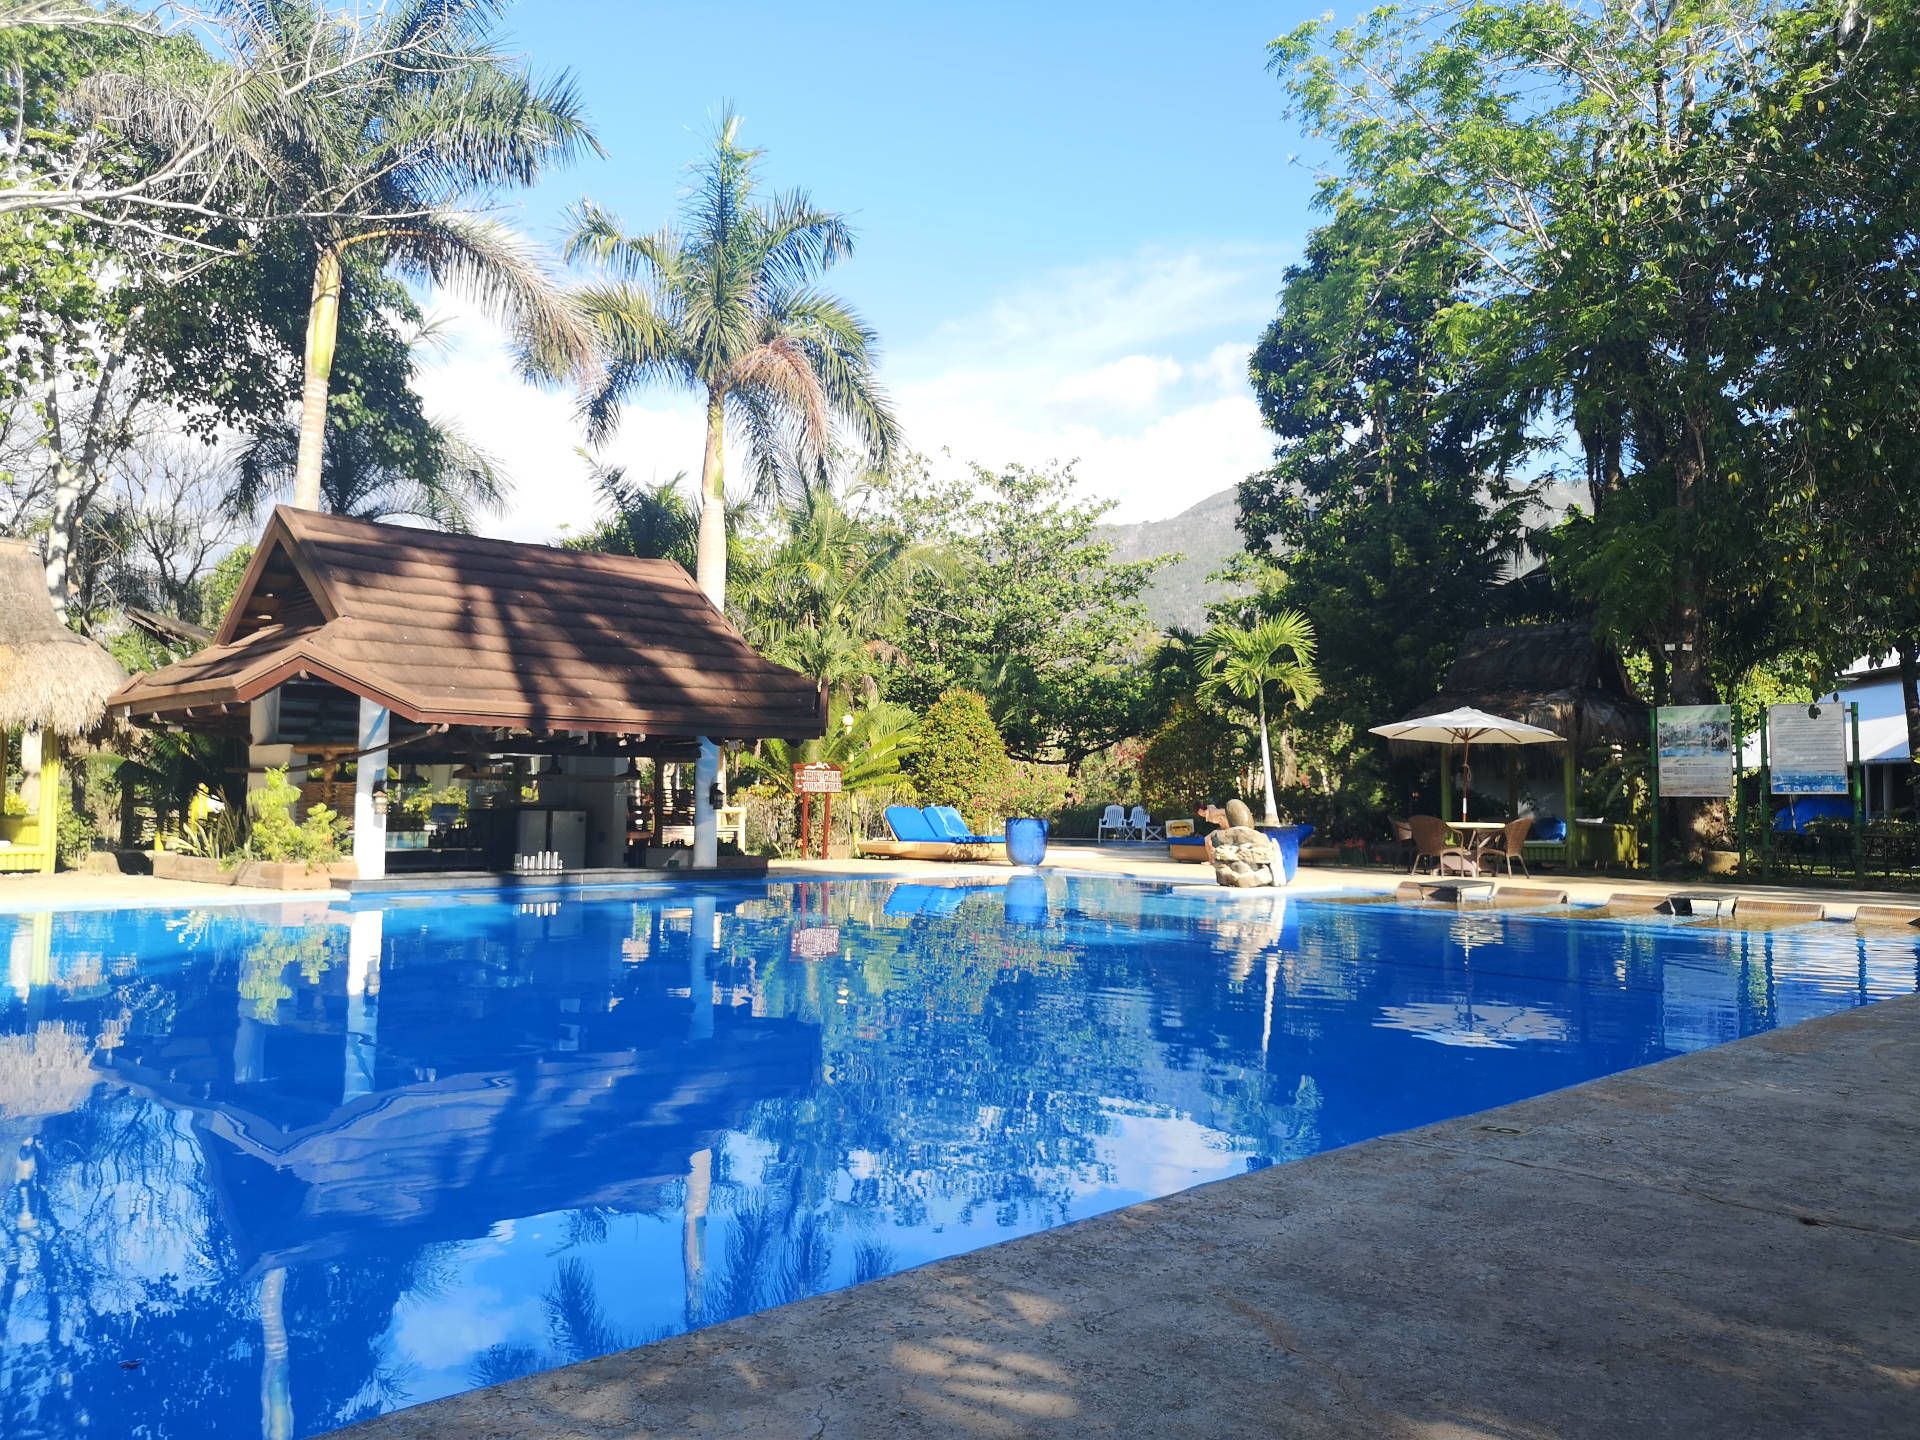 Pool und Bar in Sabang auf Palavan